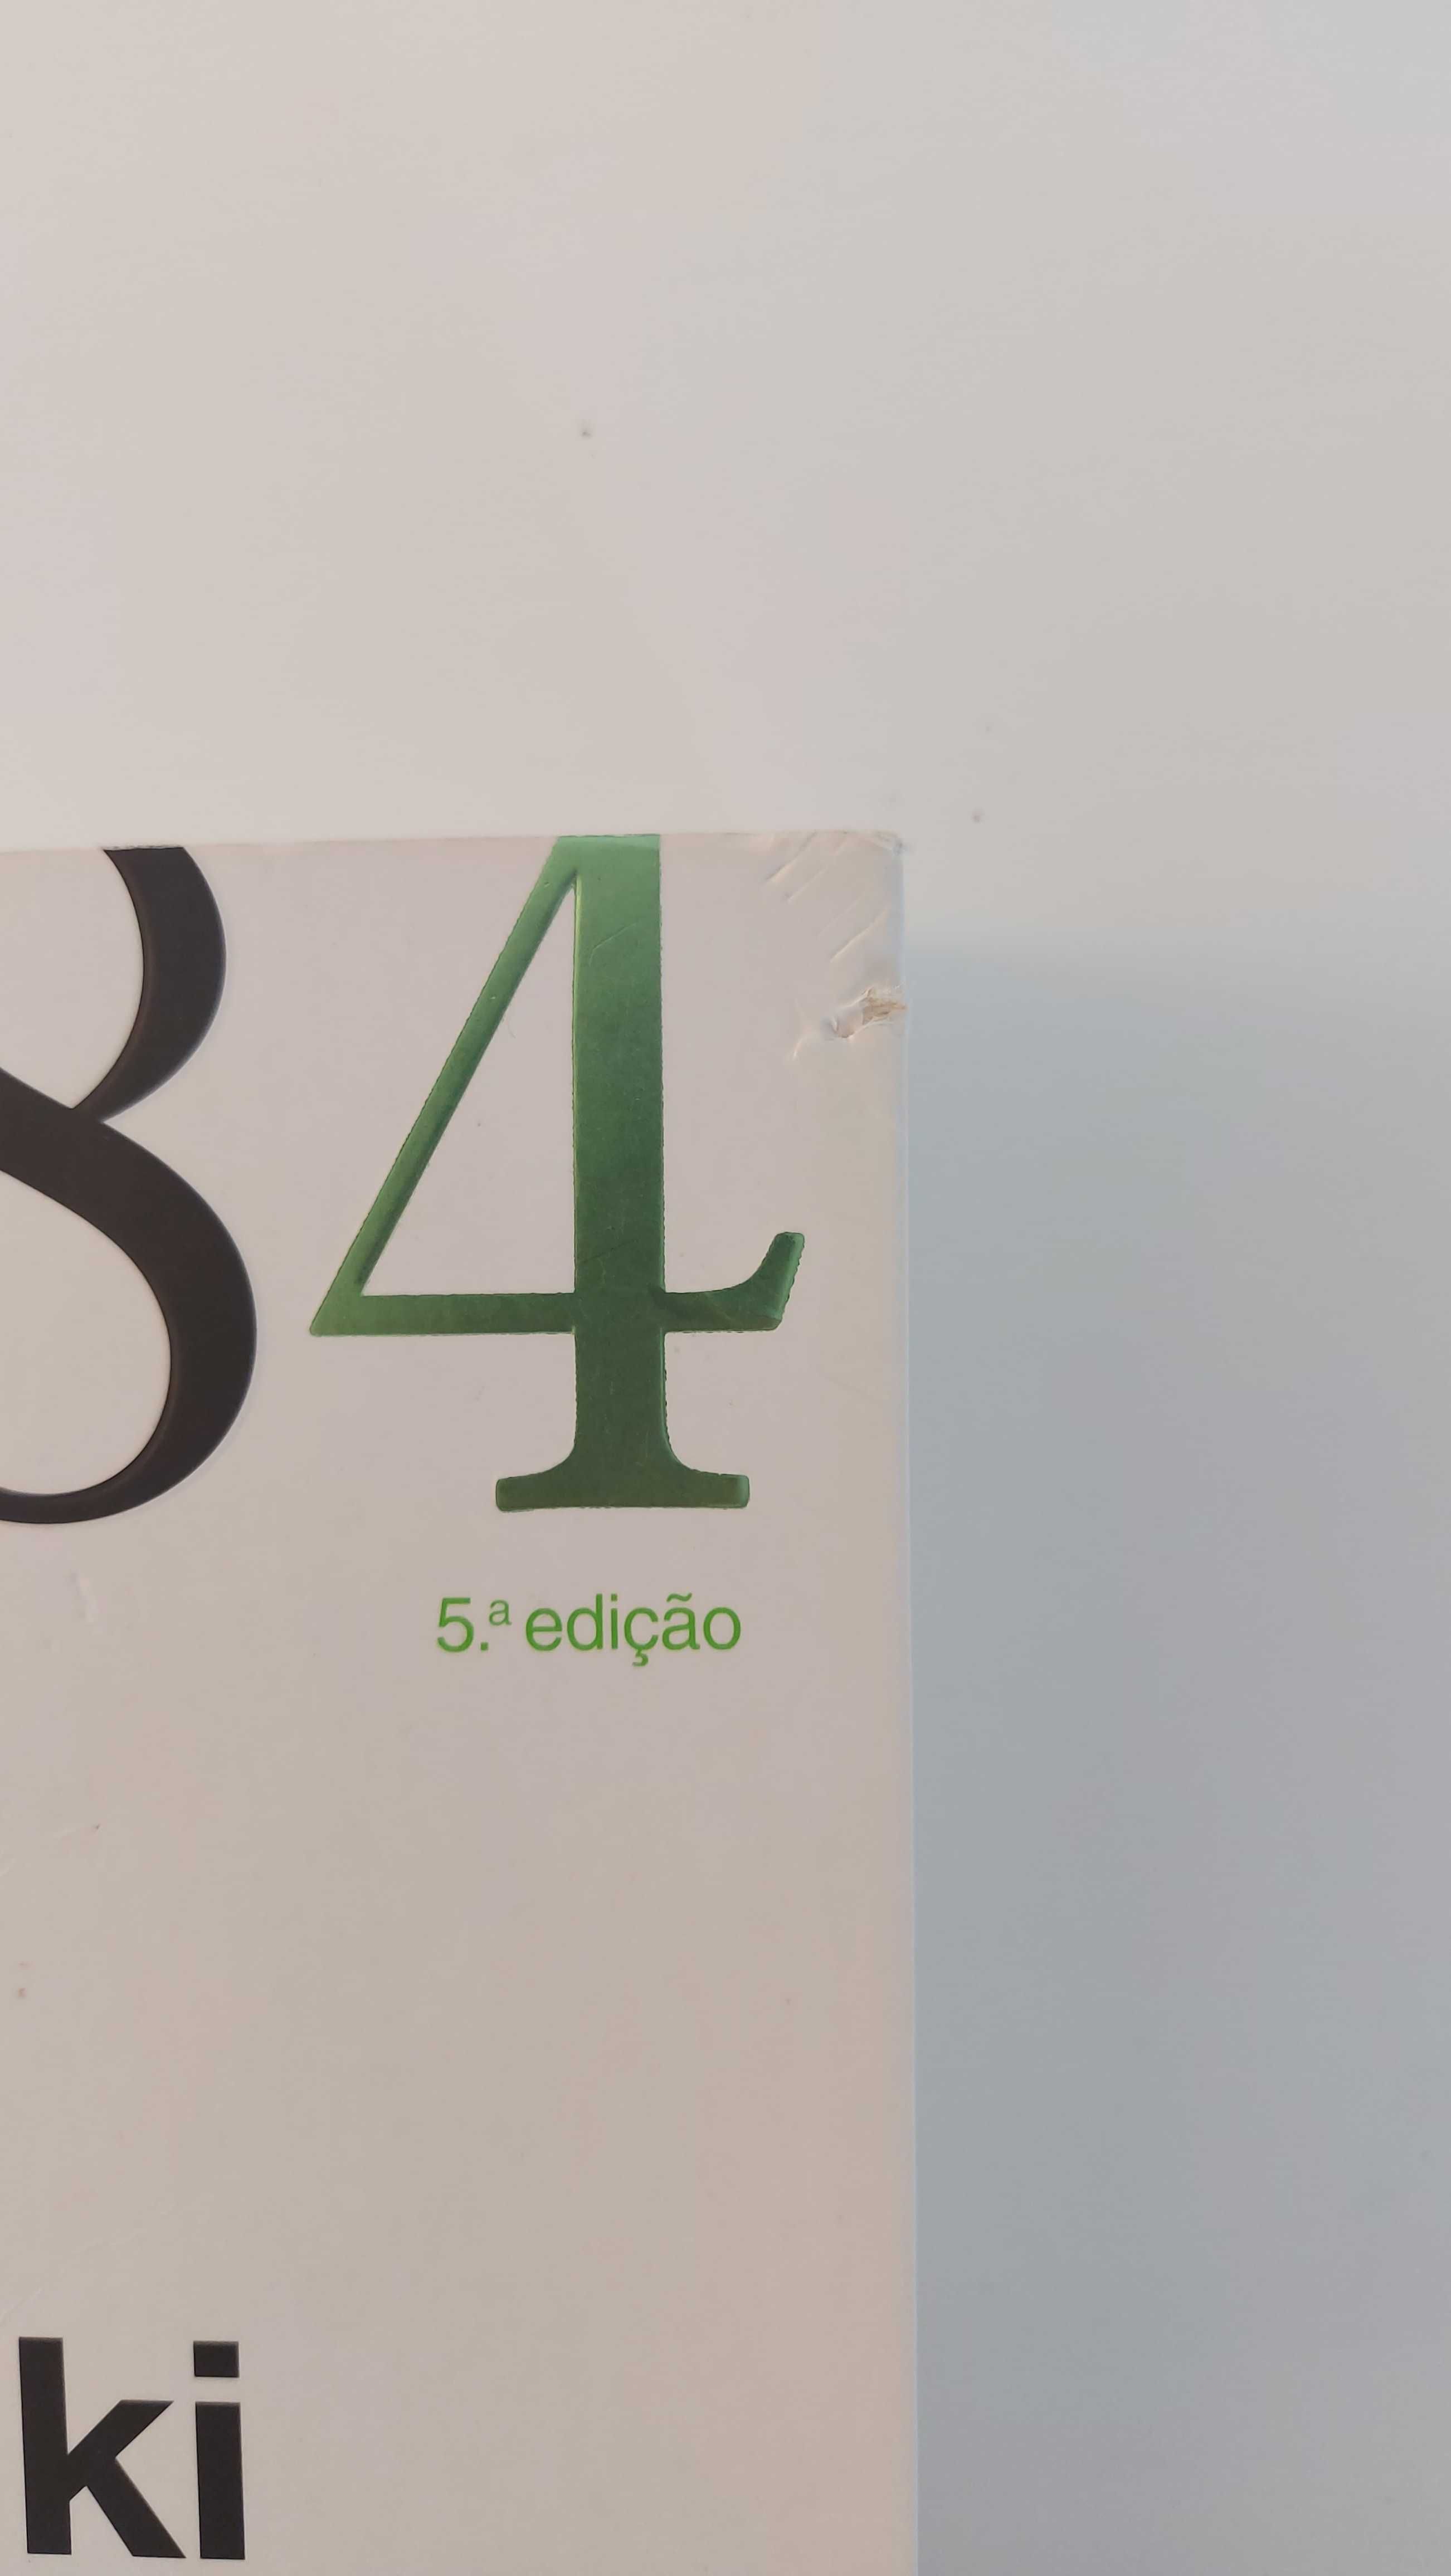 Livro "1Q84 - Livro 2" de Haruki Murakami